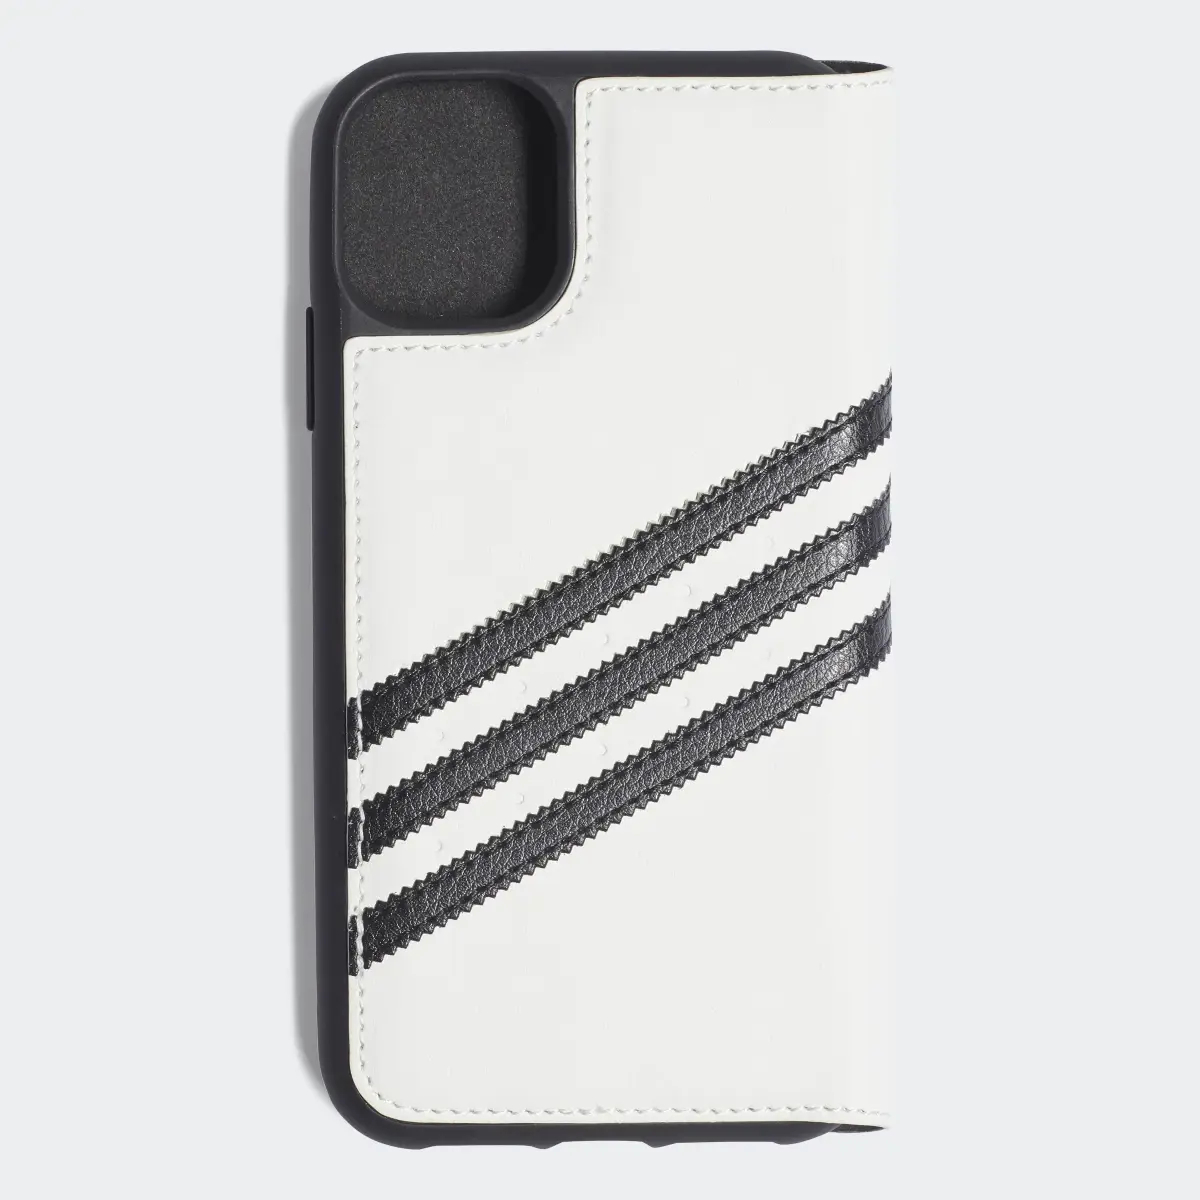 Adidas Samba Booklet Case iPhone 2019 6.1-Inch. 3